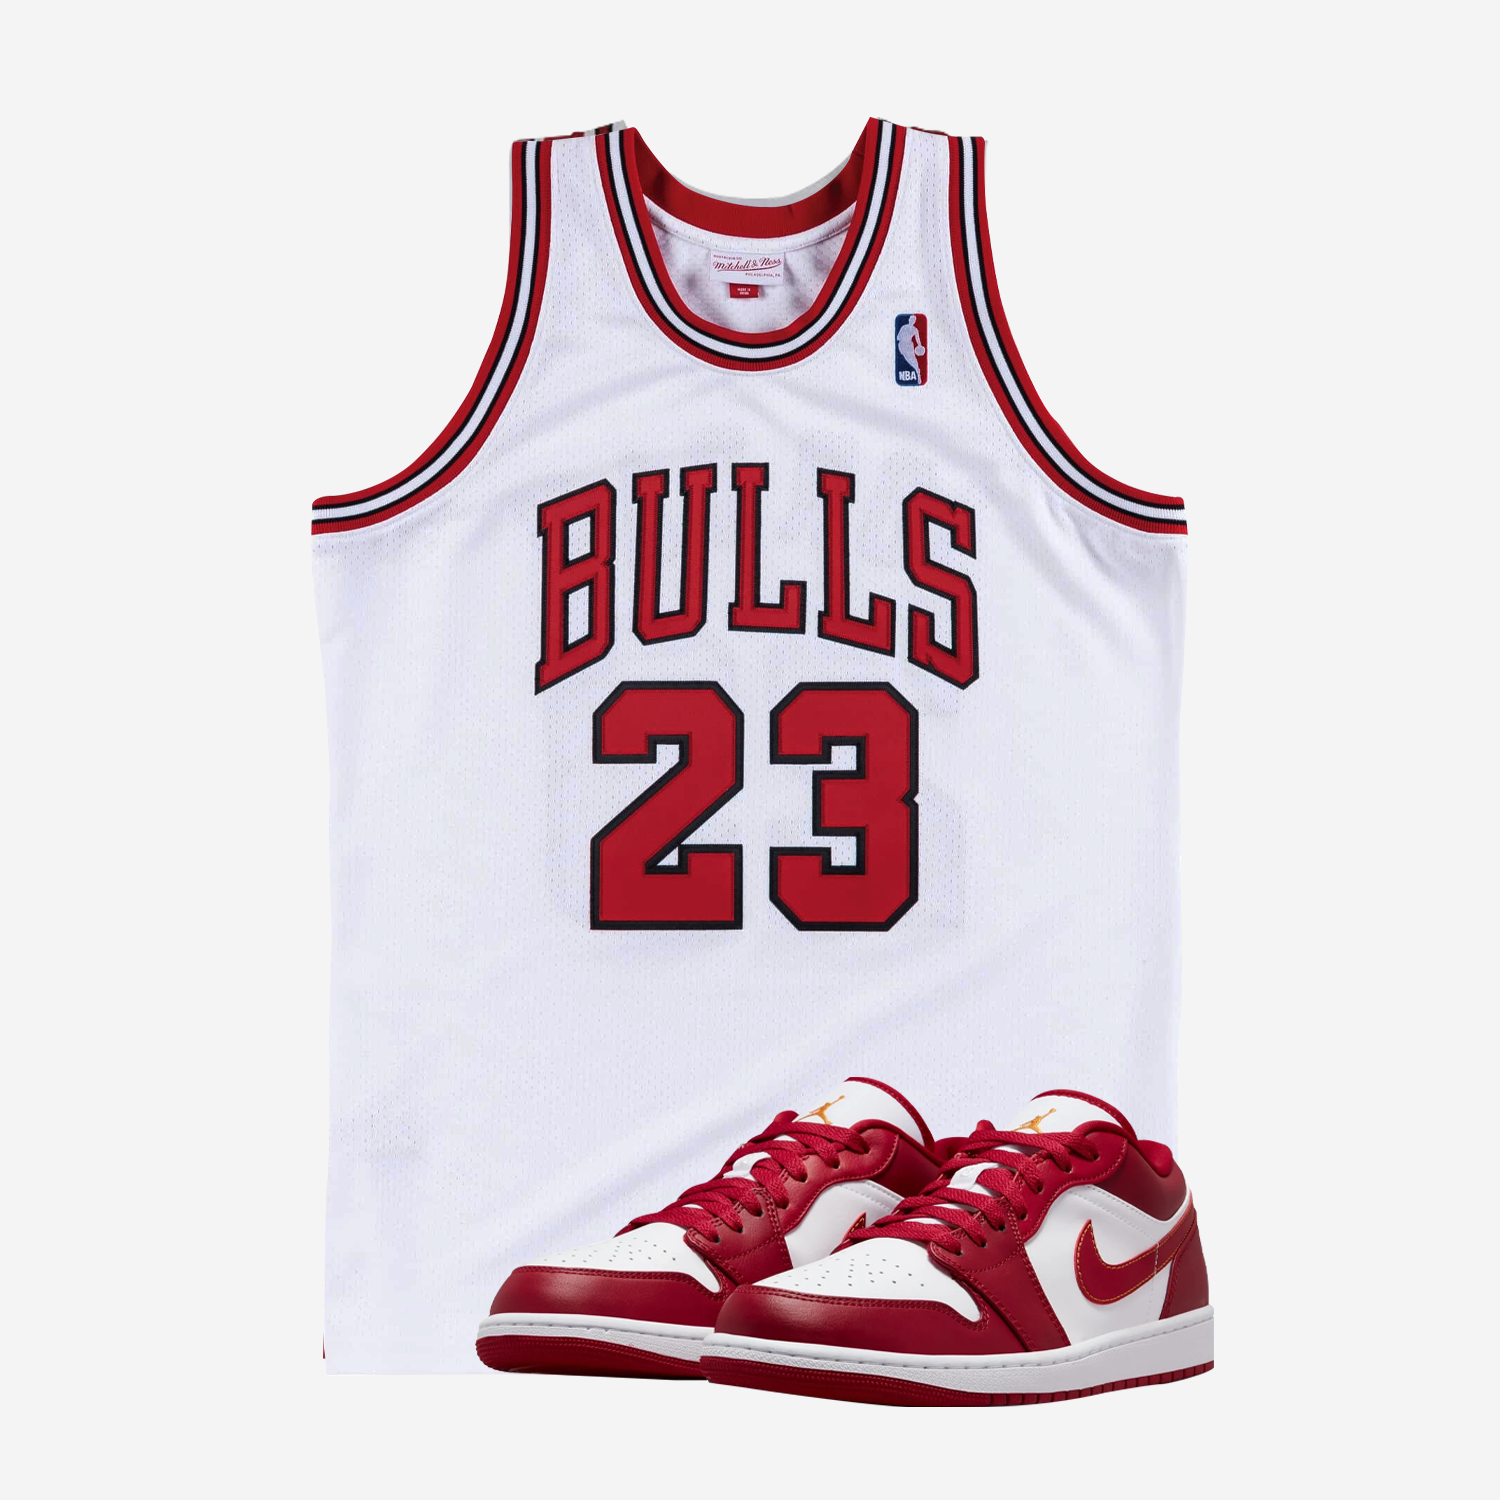 Nike Michael Jordan Chicago Bulls Swingman Jersey University Red